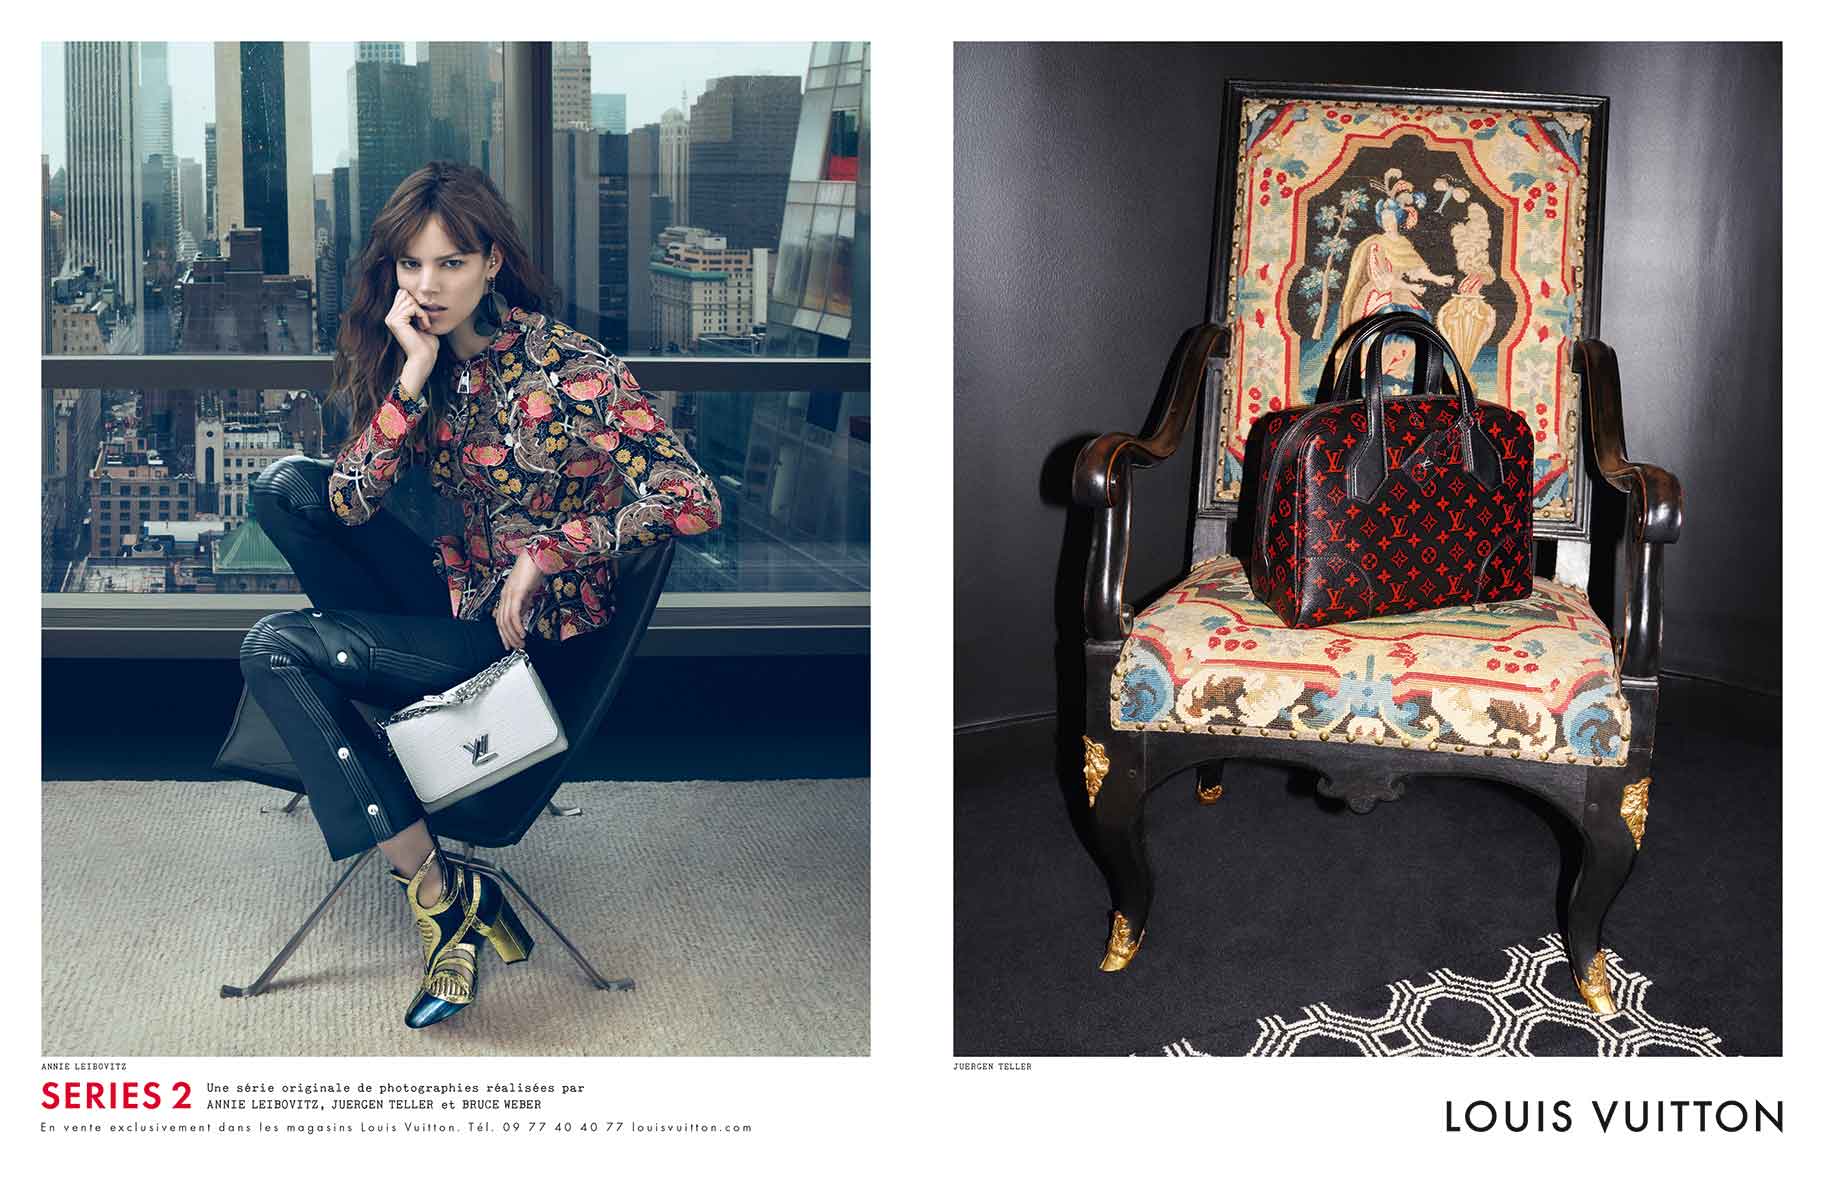 The Louis Vuitton advertising campaign - kartaruga